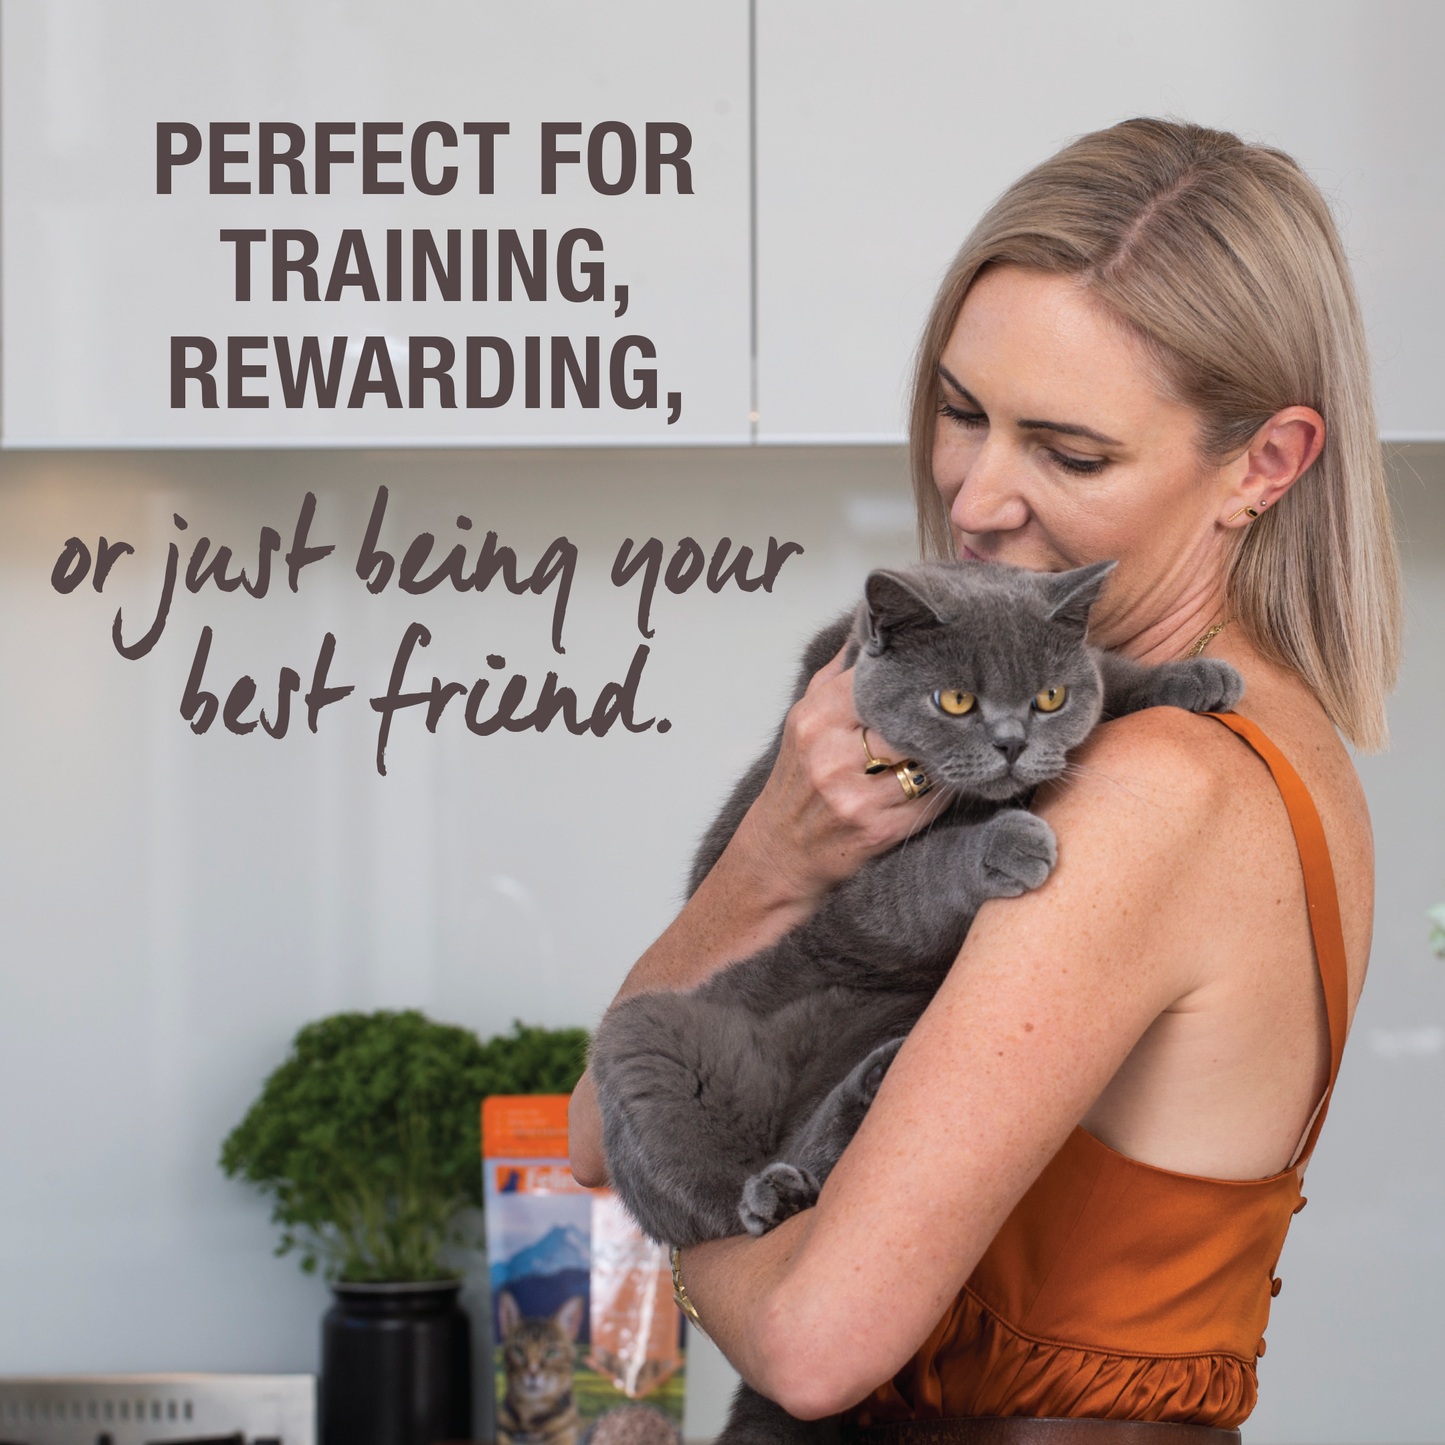 Feline Natural Cat Treats Freeze Dried Beef Healthy Bites 50g - ADS Pet Store